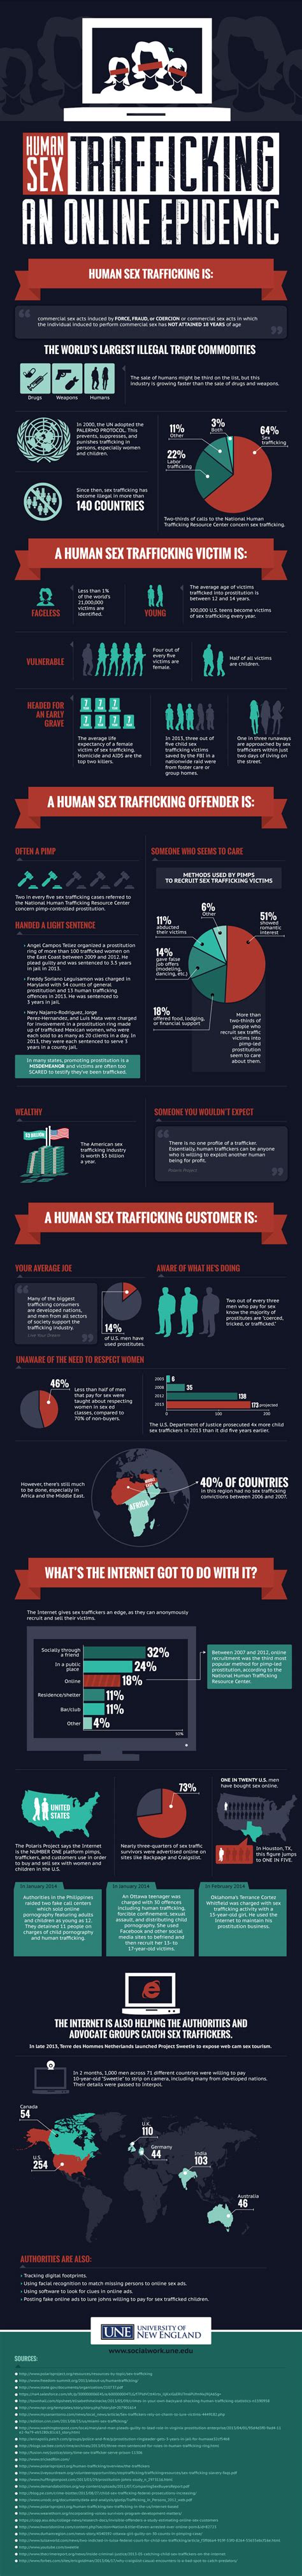 Human Sex Trafficking An Online Epidemic [infographic]